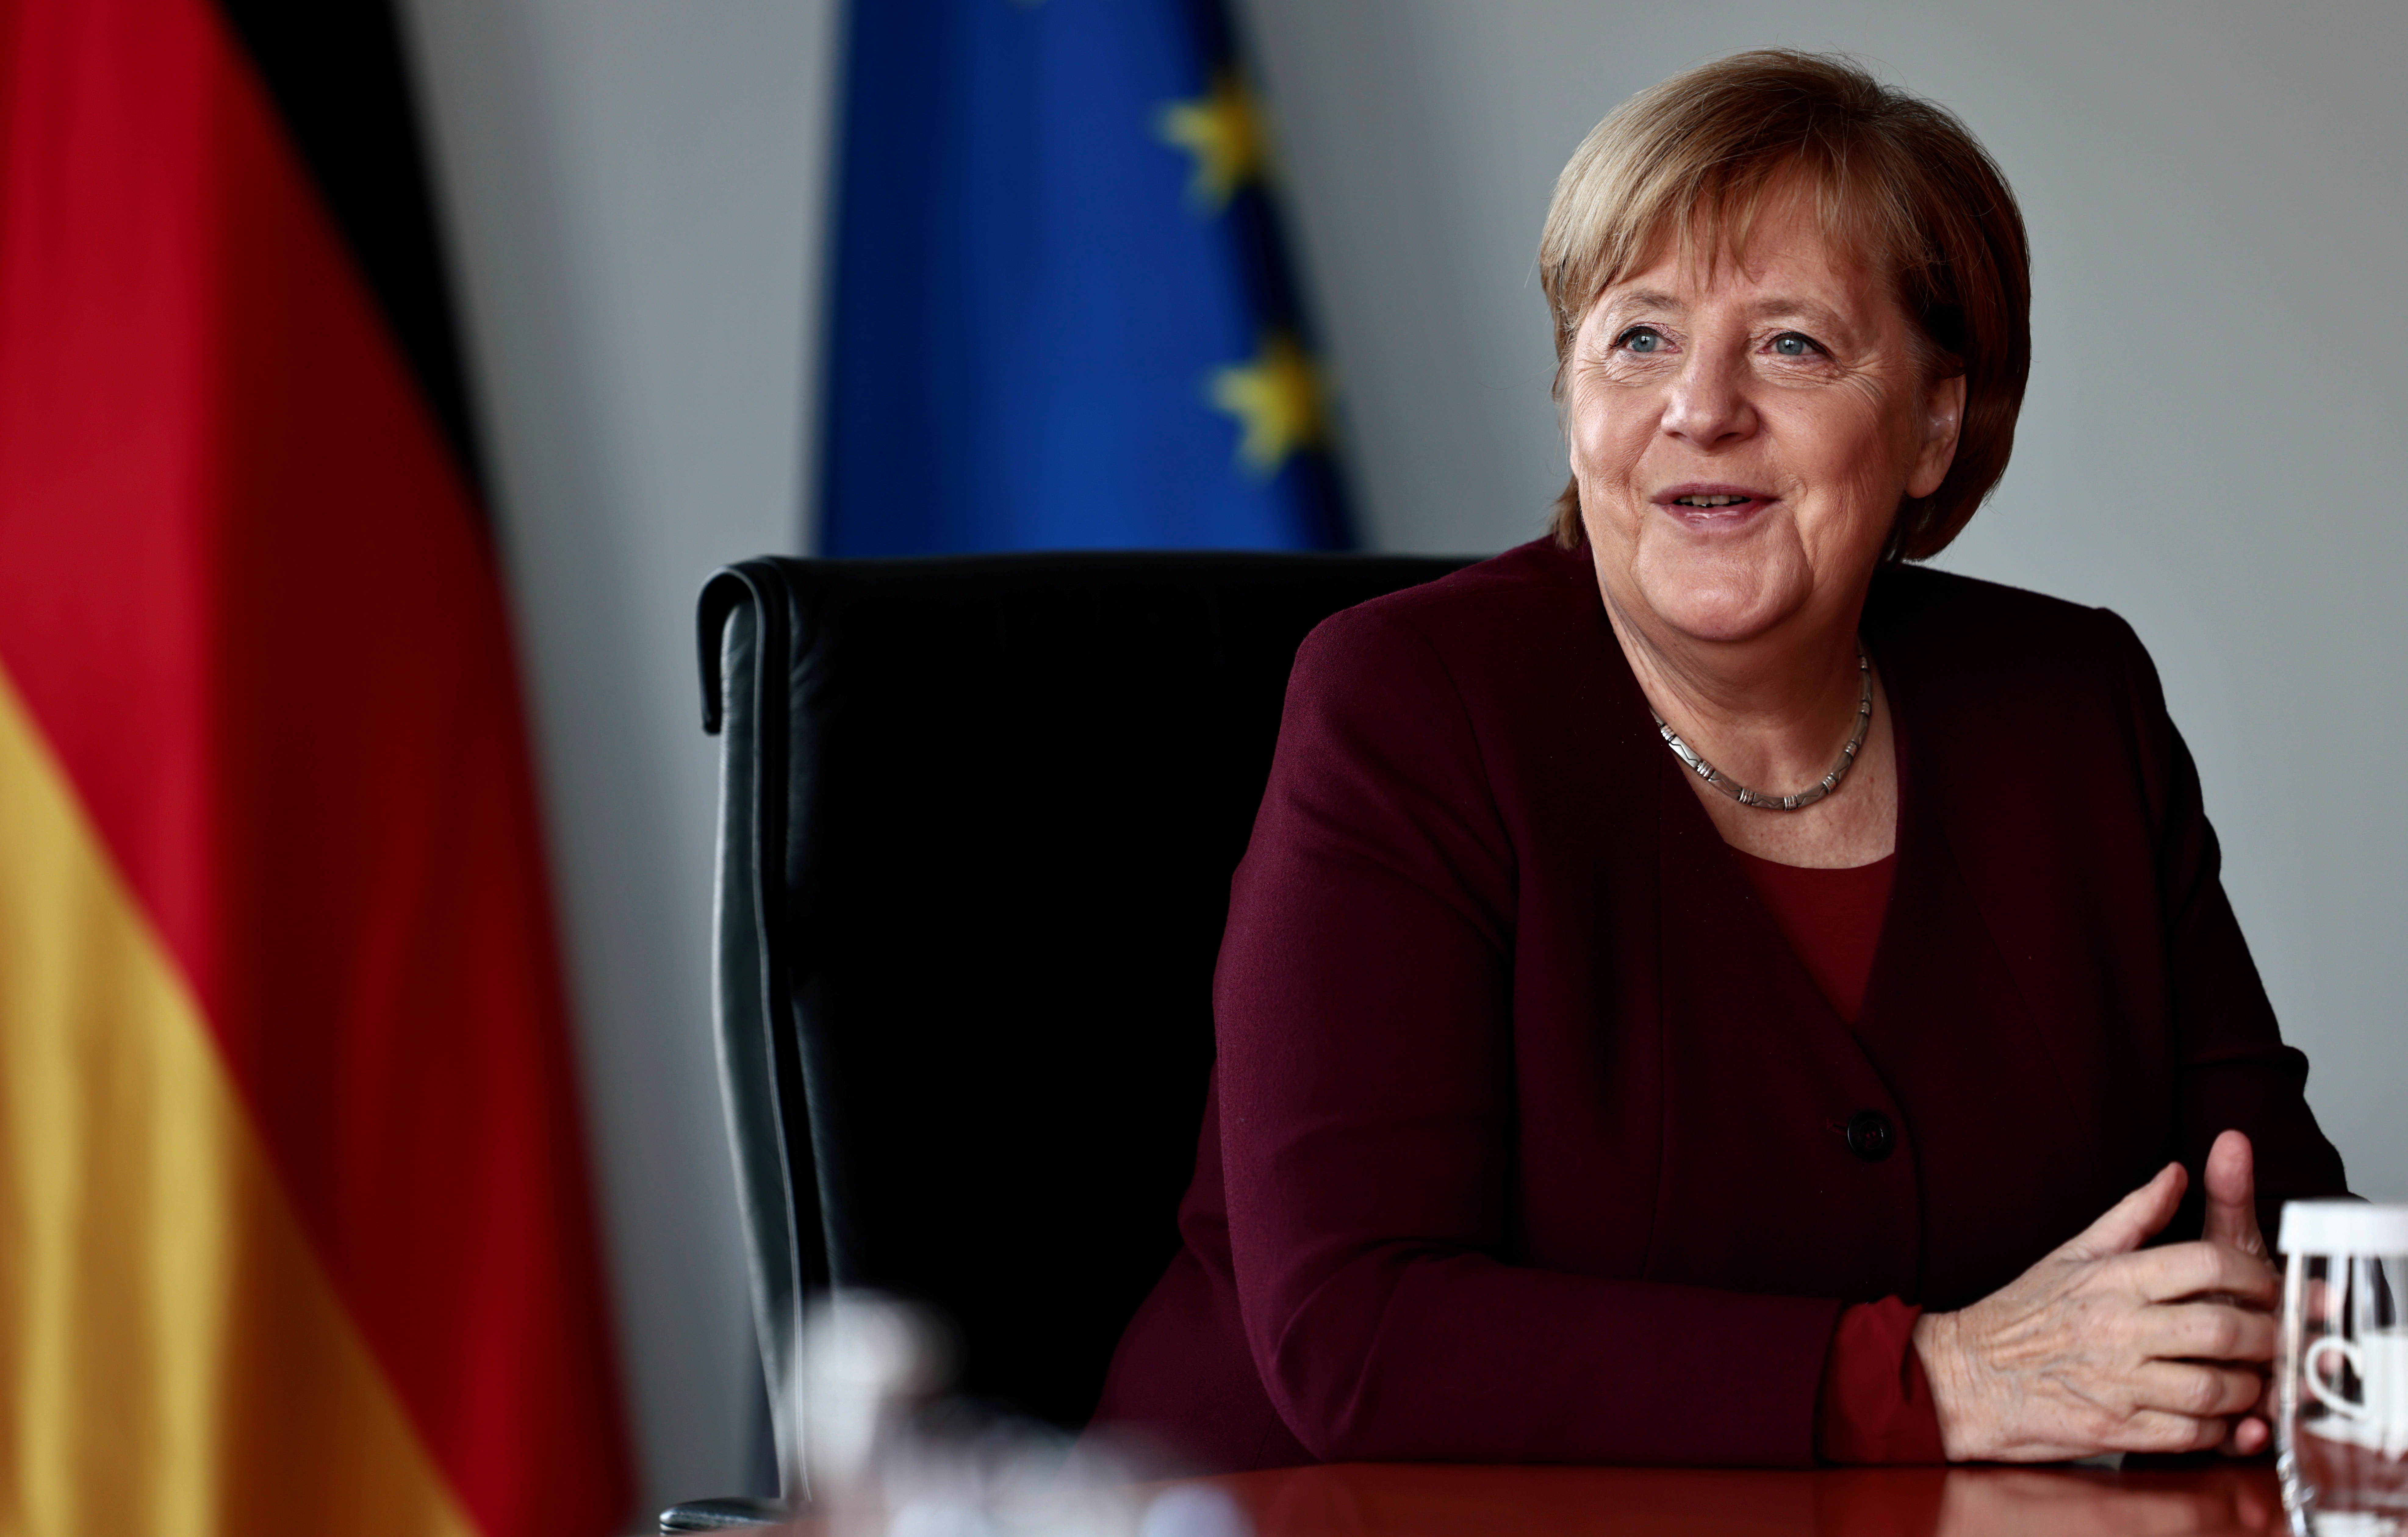 German Chancellor Angela Merkel attends a Reuters interview at the Chancellery in Berlin, Germany, November 11, 2021. REUTERS/Hannibal Hanschke